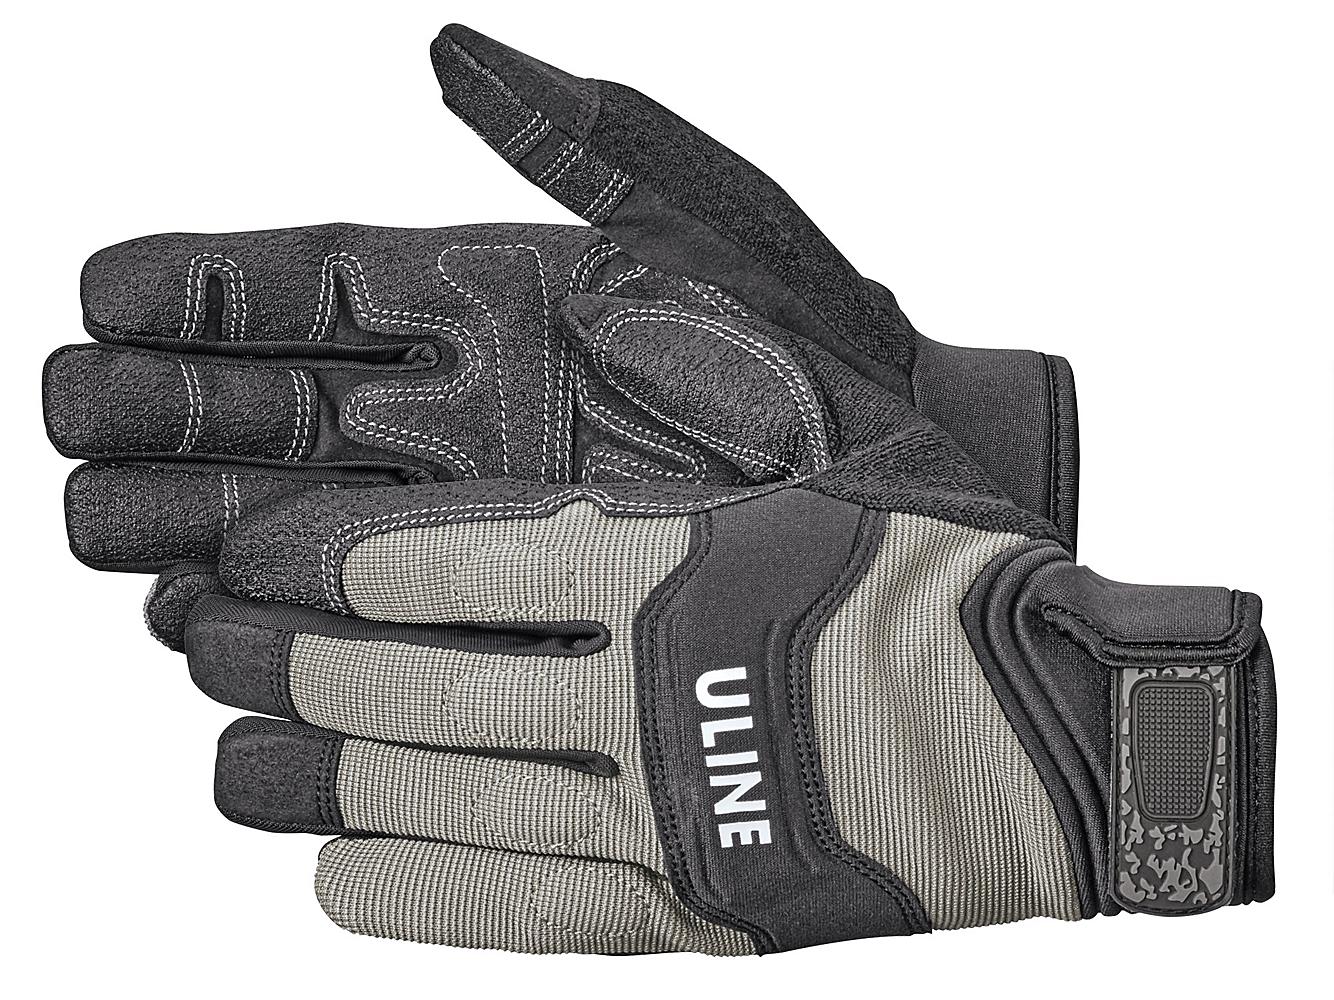 Heavy Utility Work Gloves XL 